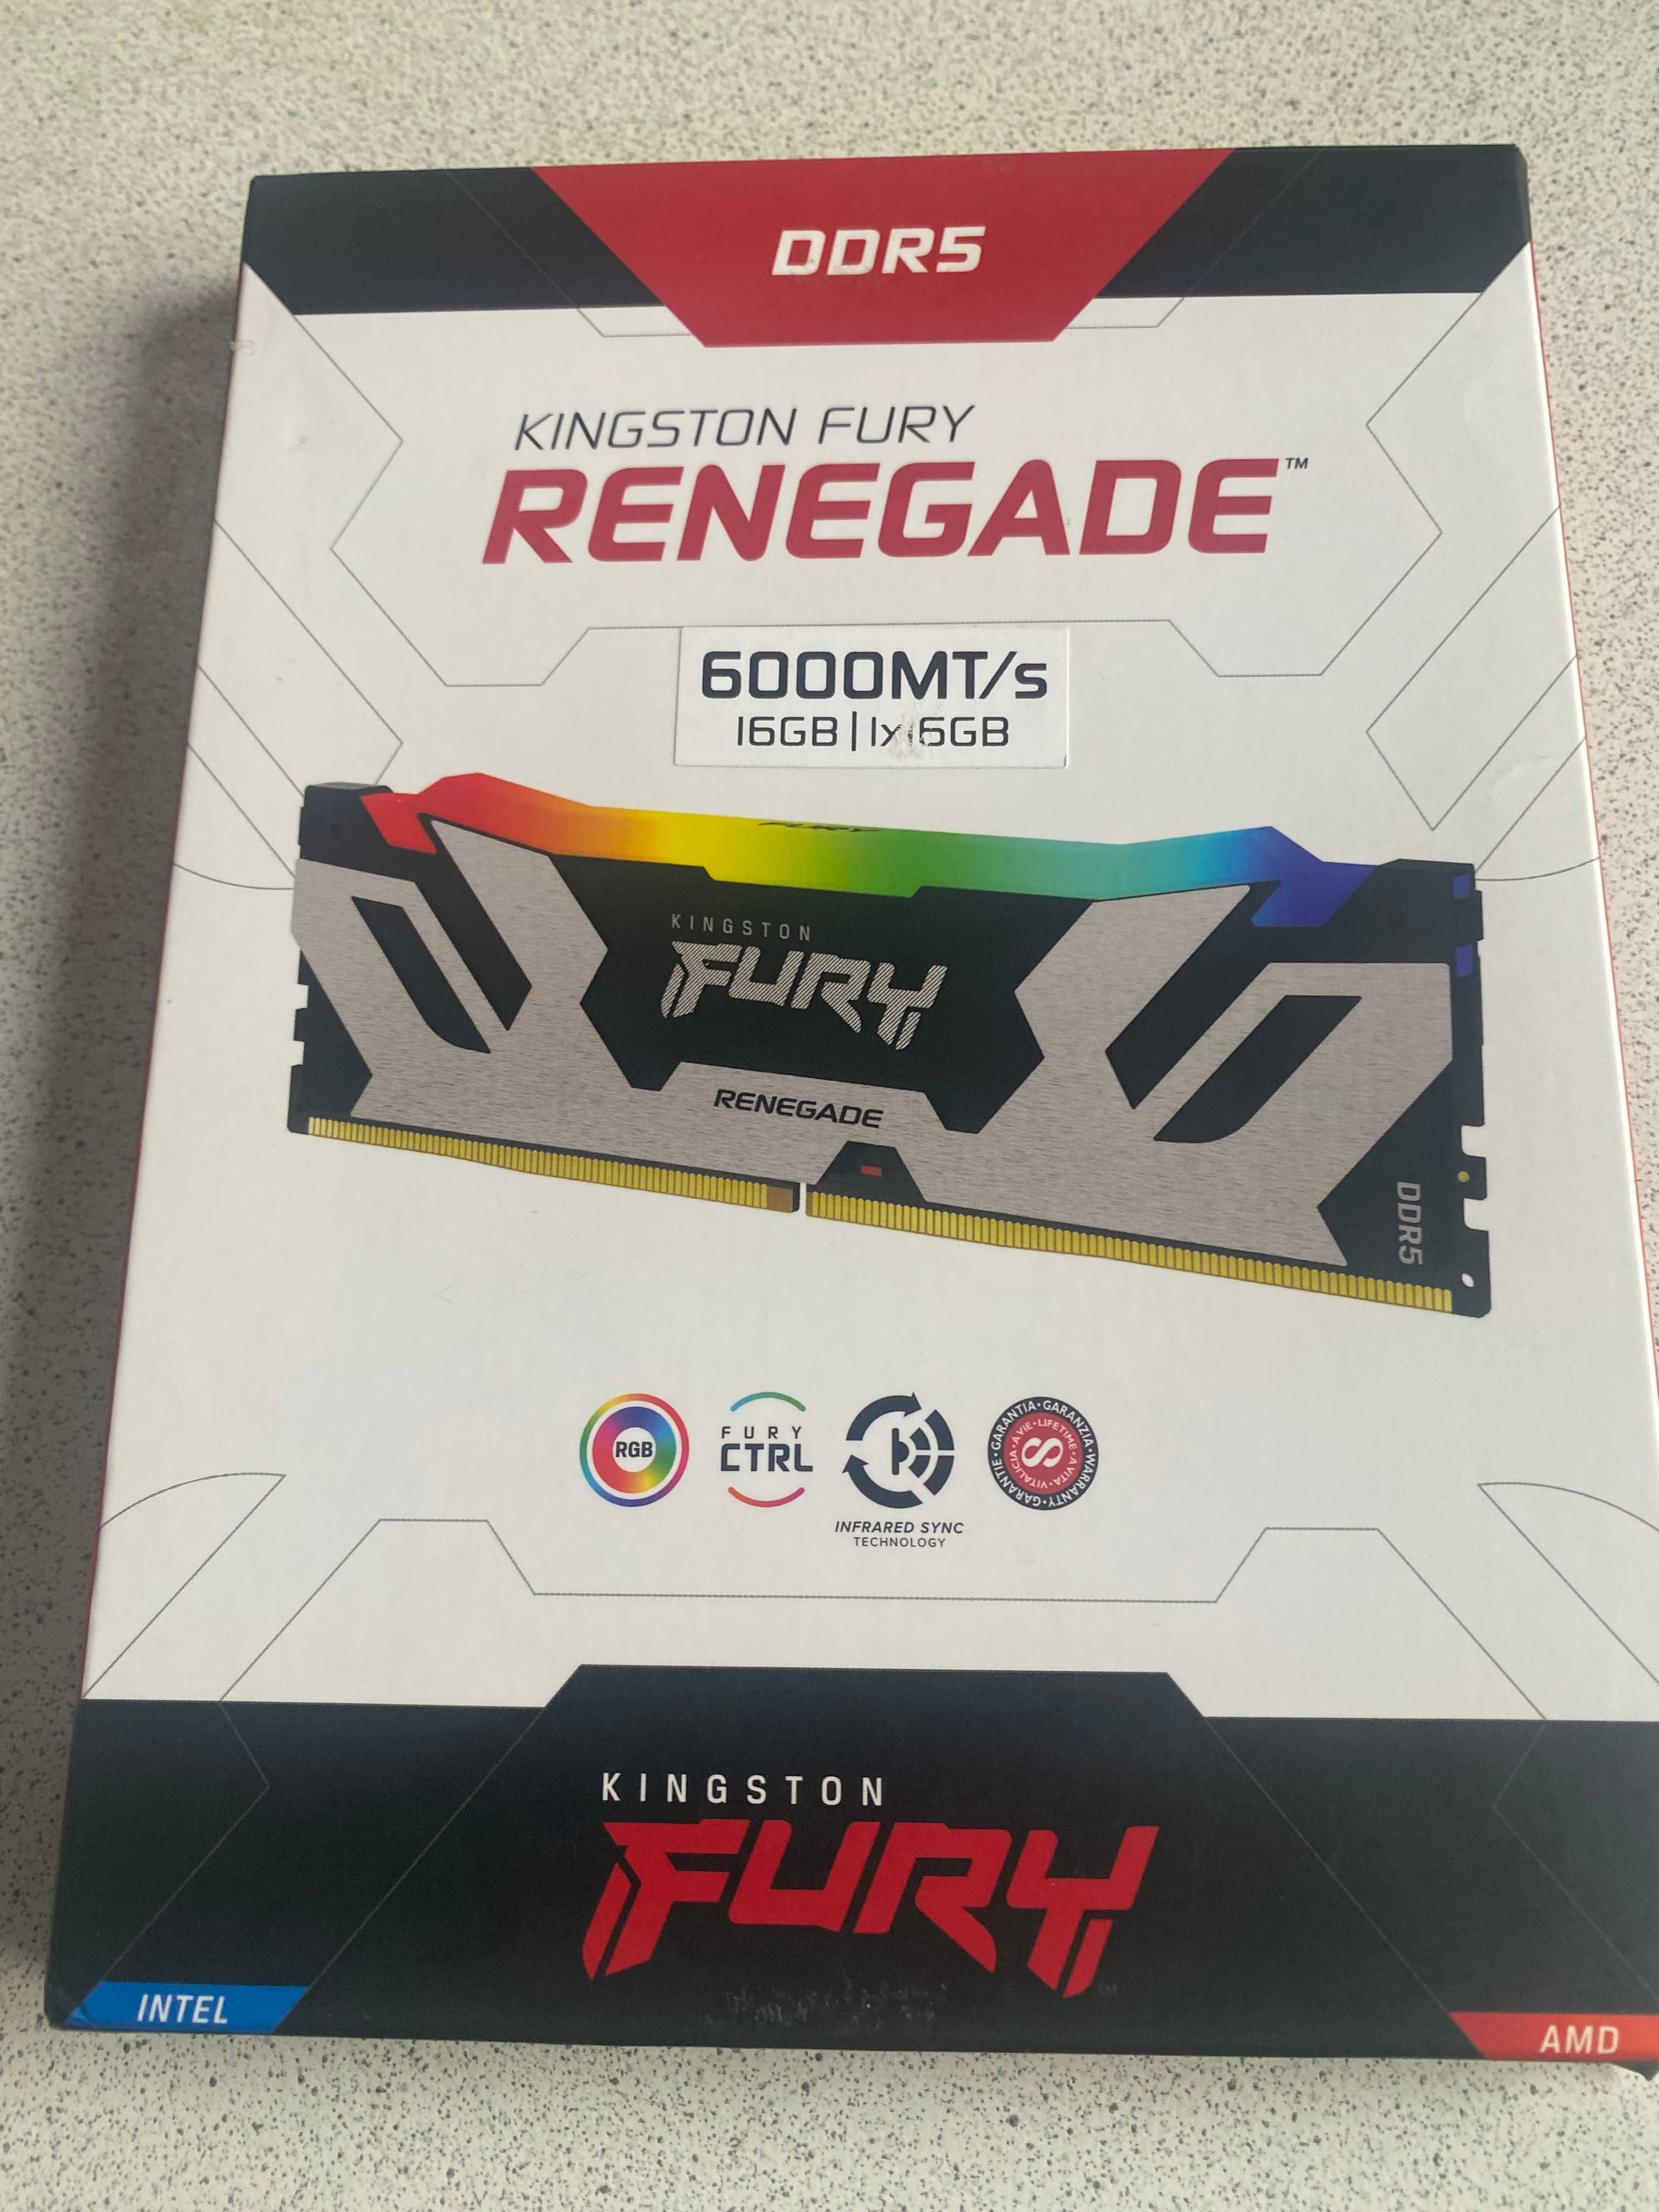 Kinston Fury Renegade RGB 16gb 6000